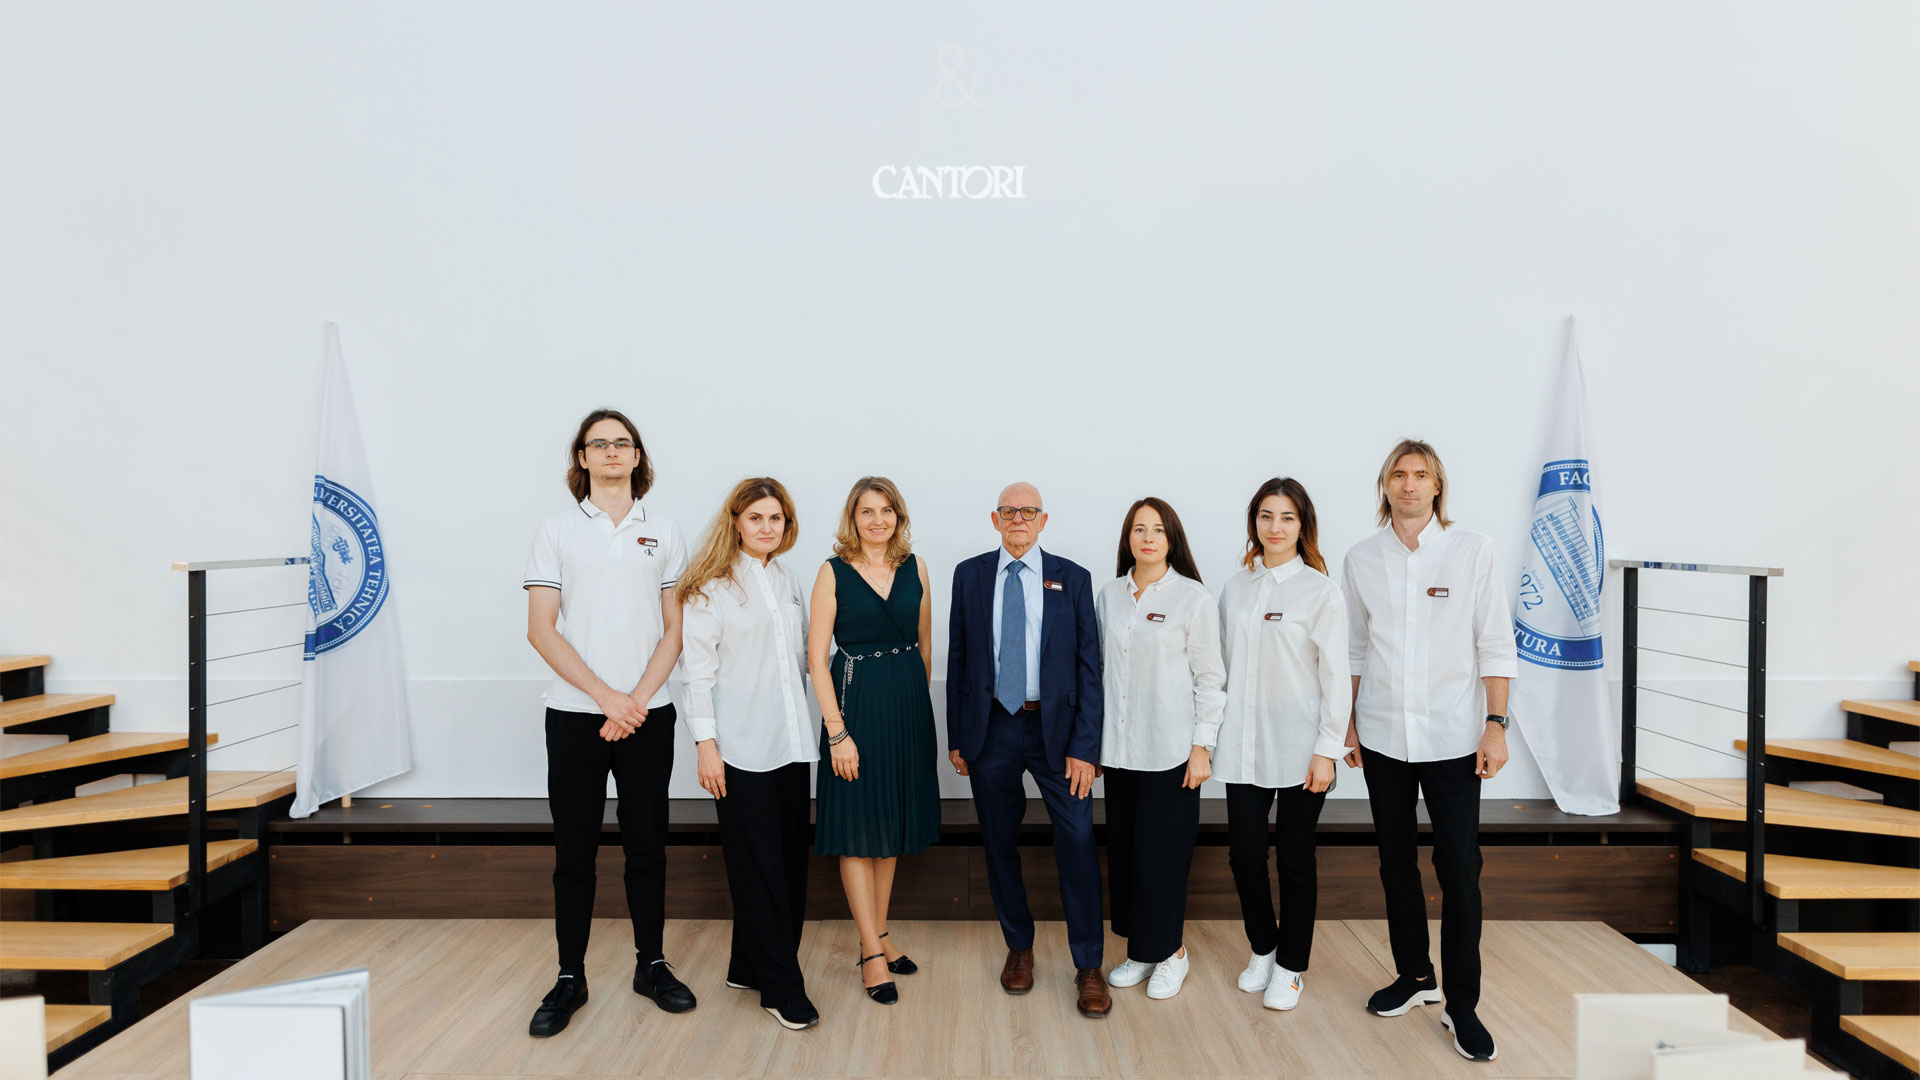 19/09/2022 Cantori launches the "Design-concept at the mobilierului în stil Cantori" competition with the University of Chișinău (Moldova) - Cantori